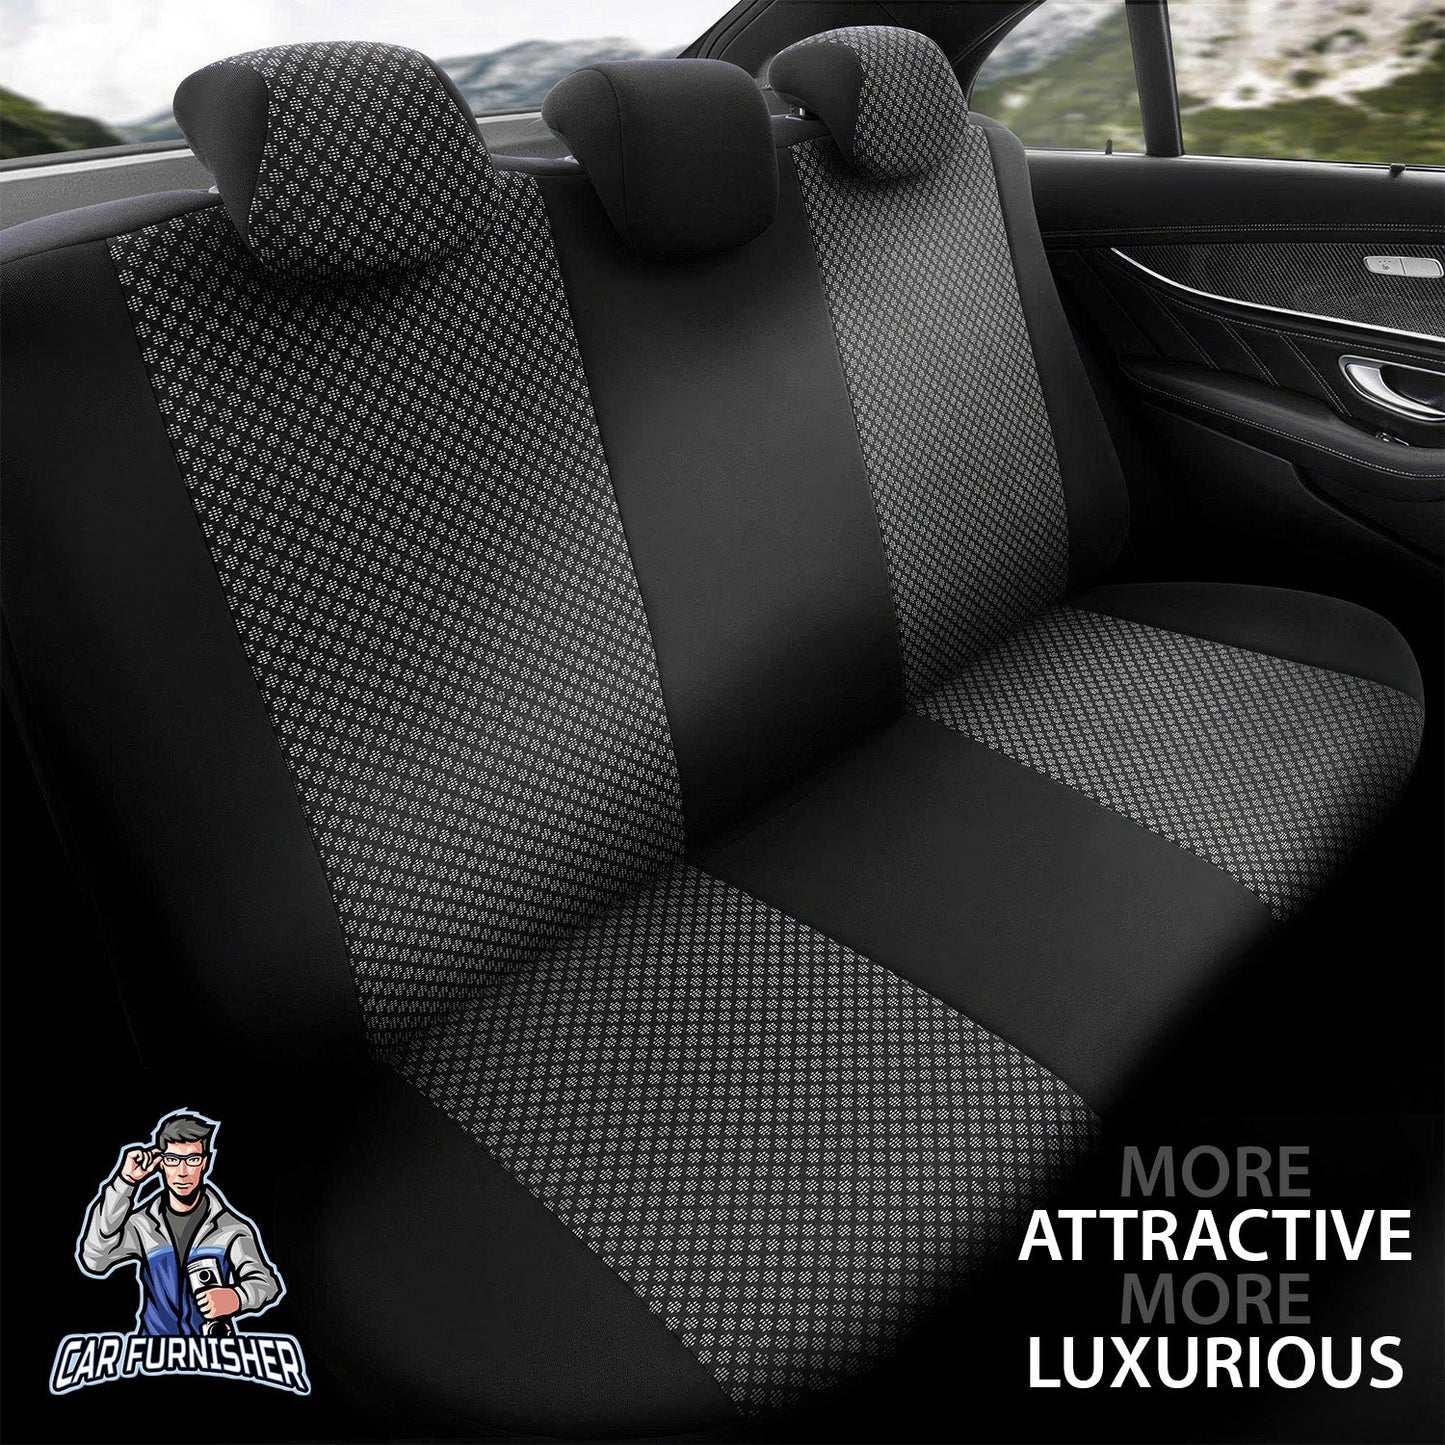 Volkswagen Jetta Seat Covers Attraction Design Black 5 Seats + Headrests (Full Set) Cotton Fabric